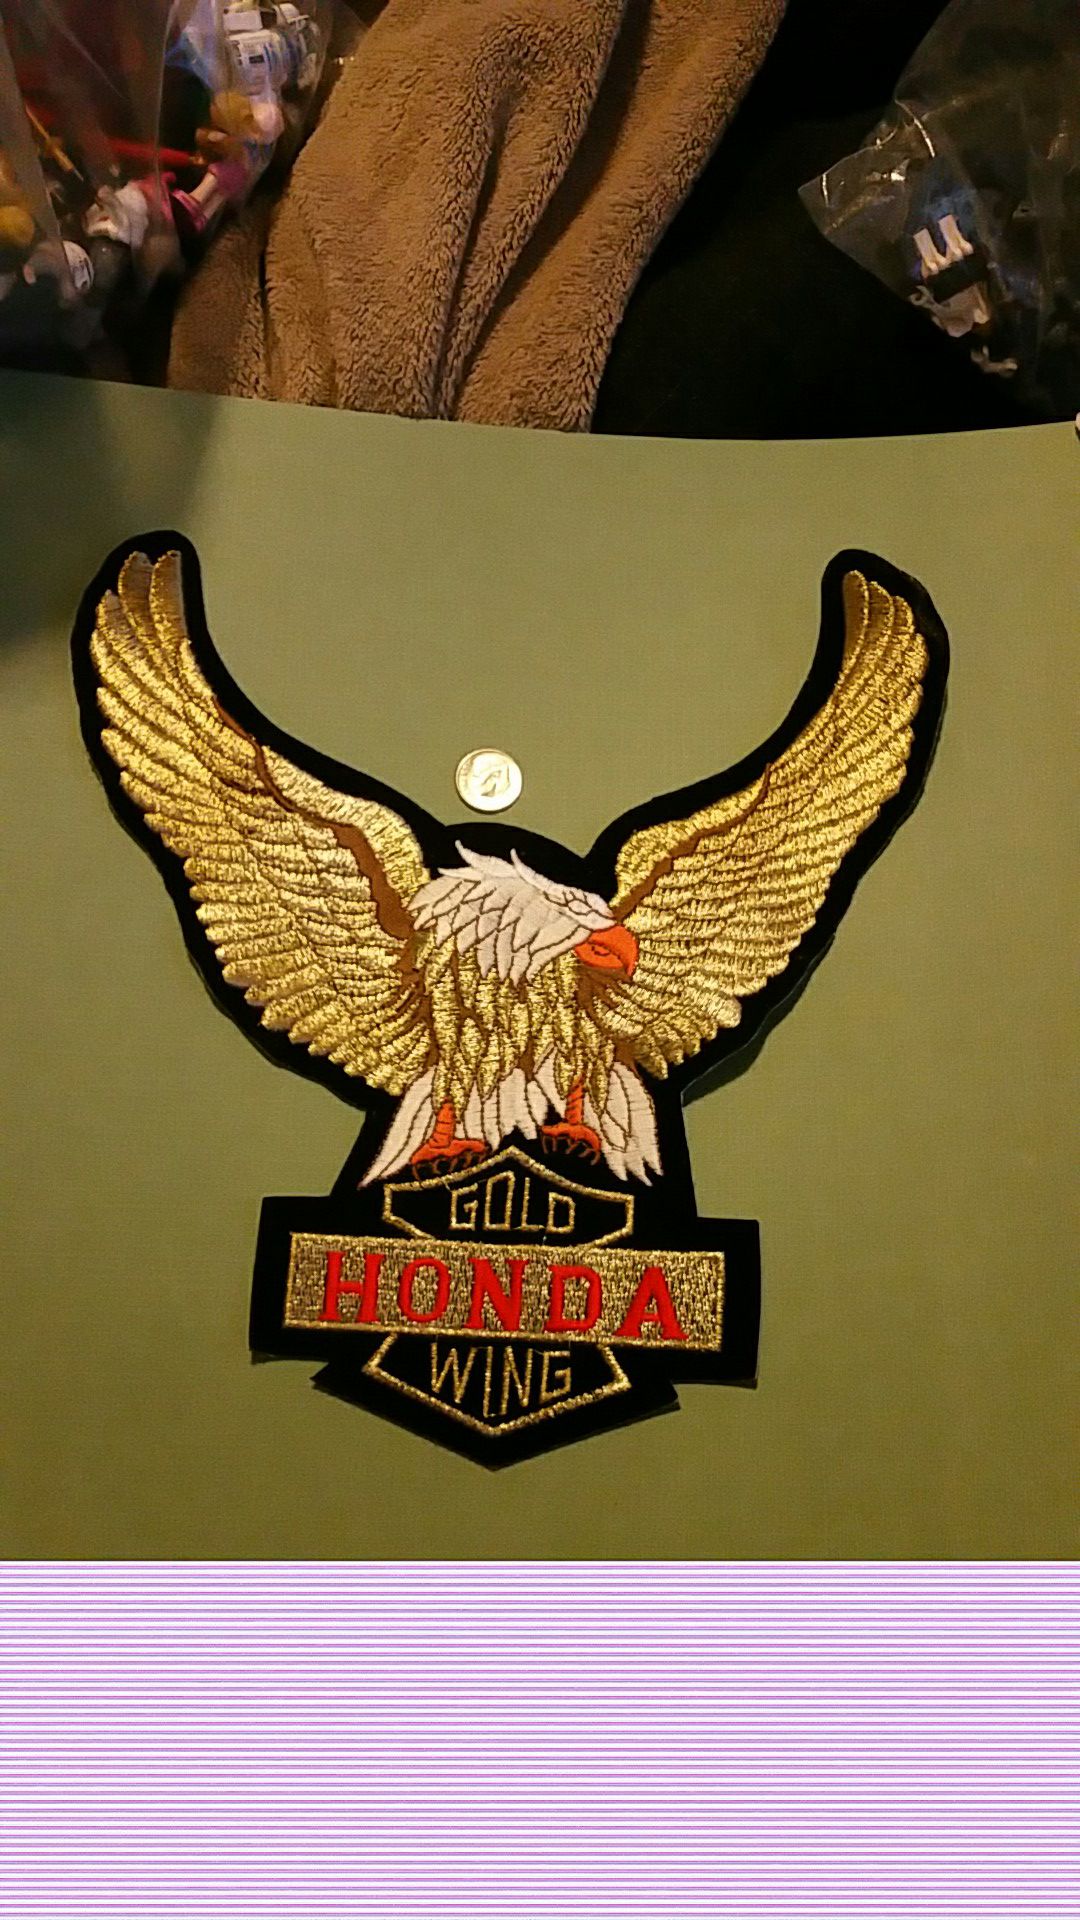 Honda goldwing motorcycle patch $10